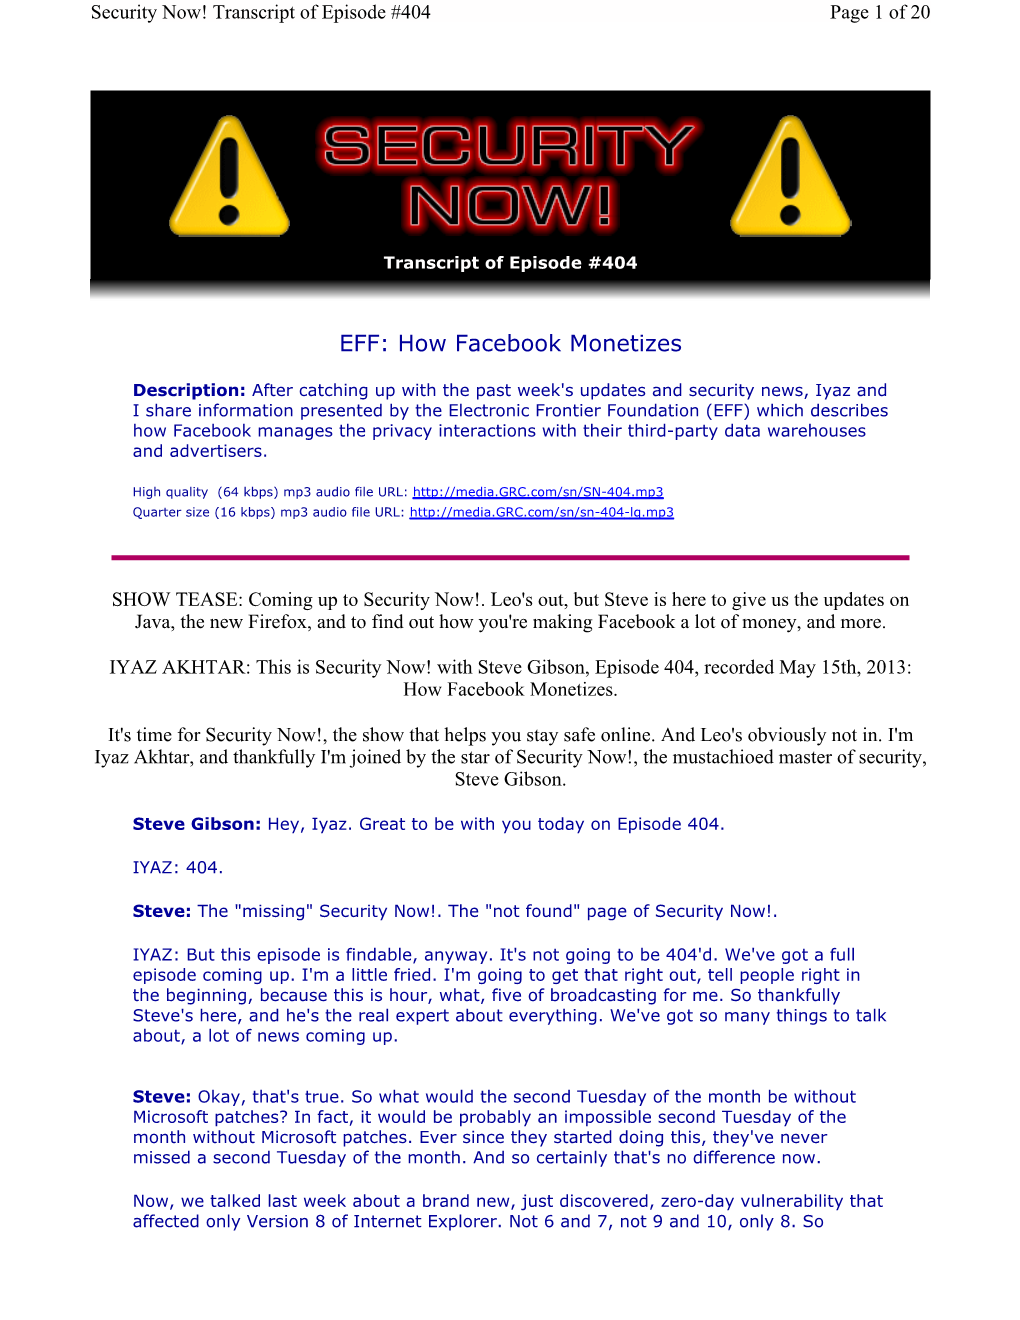 EFF: How Facebook Monetizes